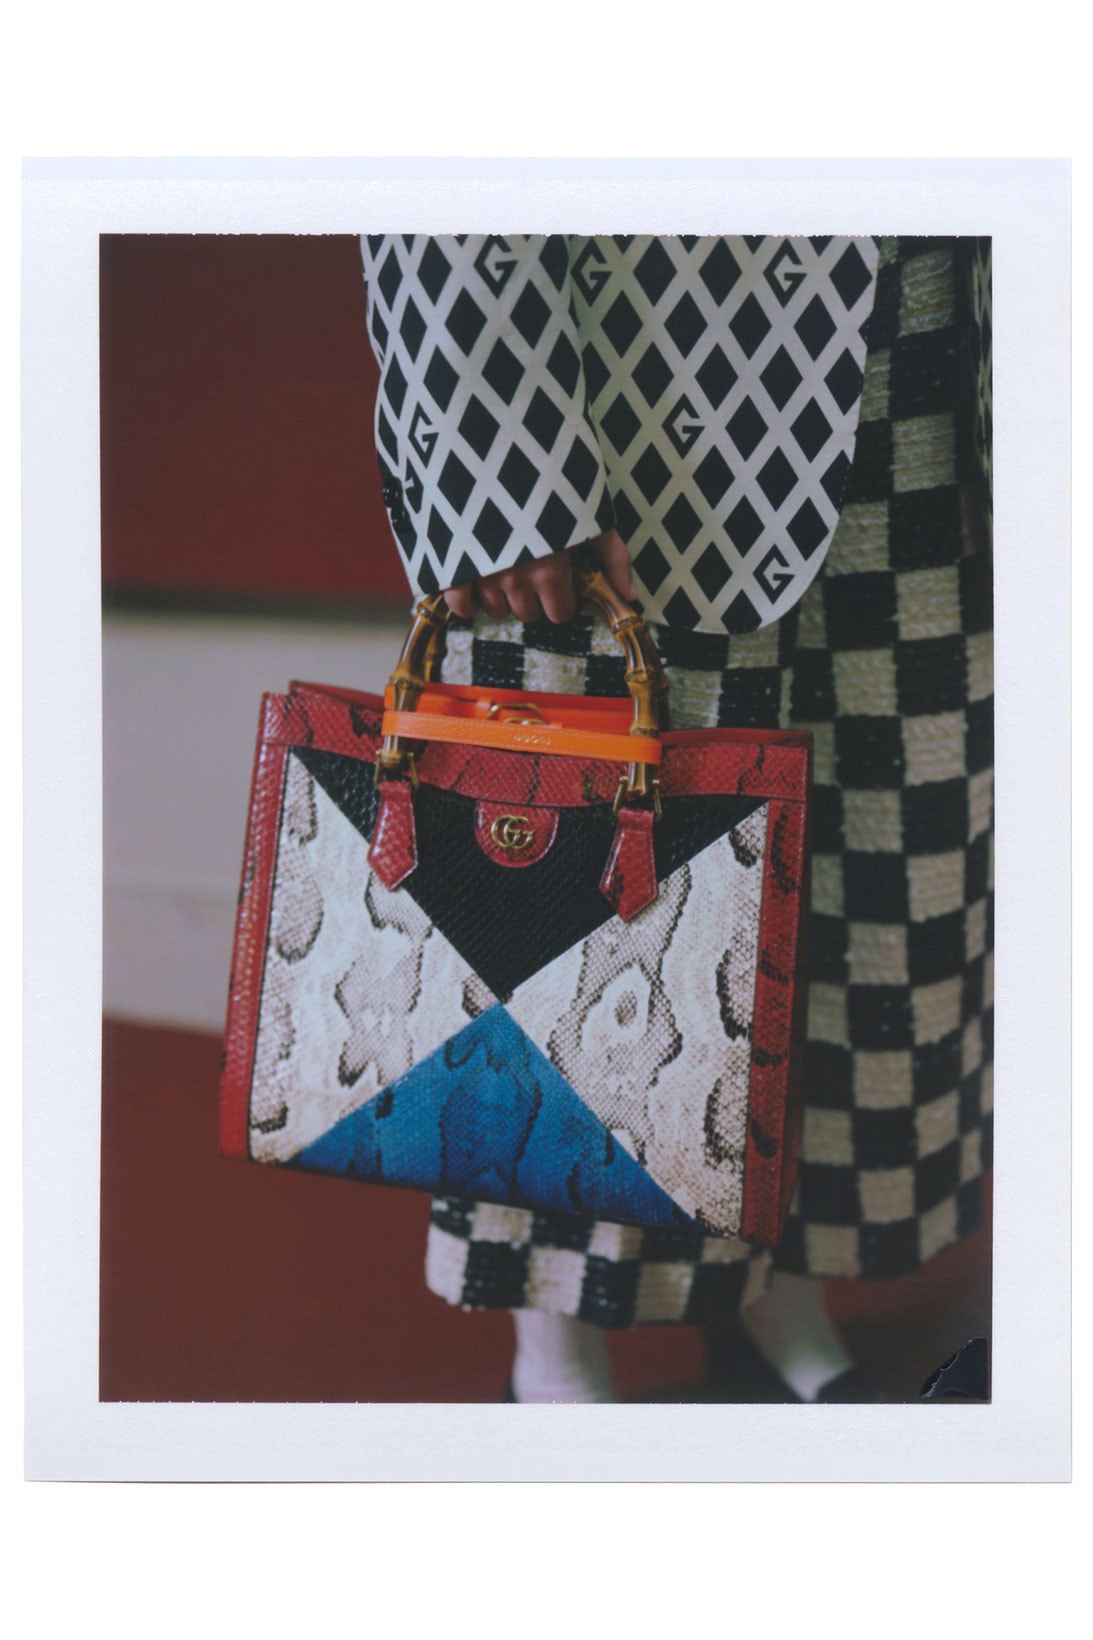 gucci diana handbag close up details